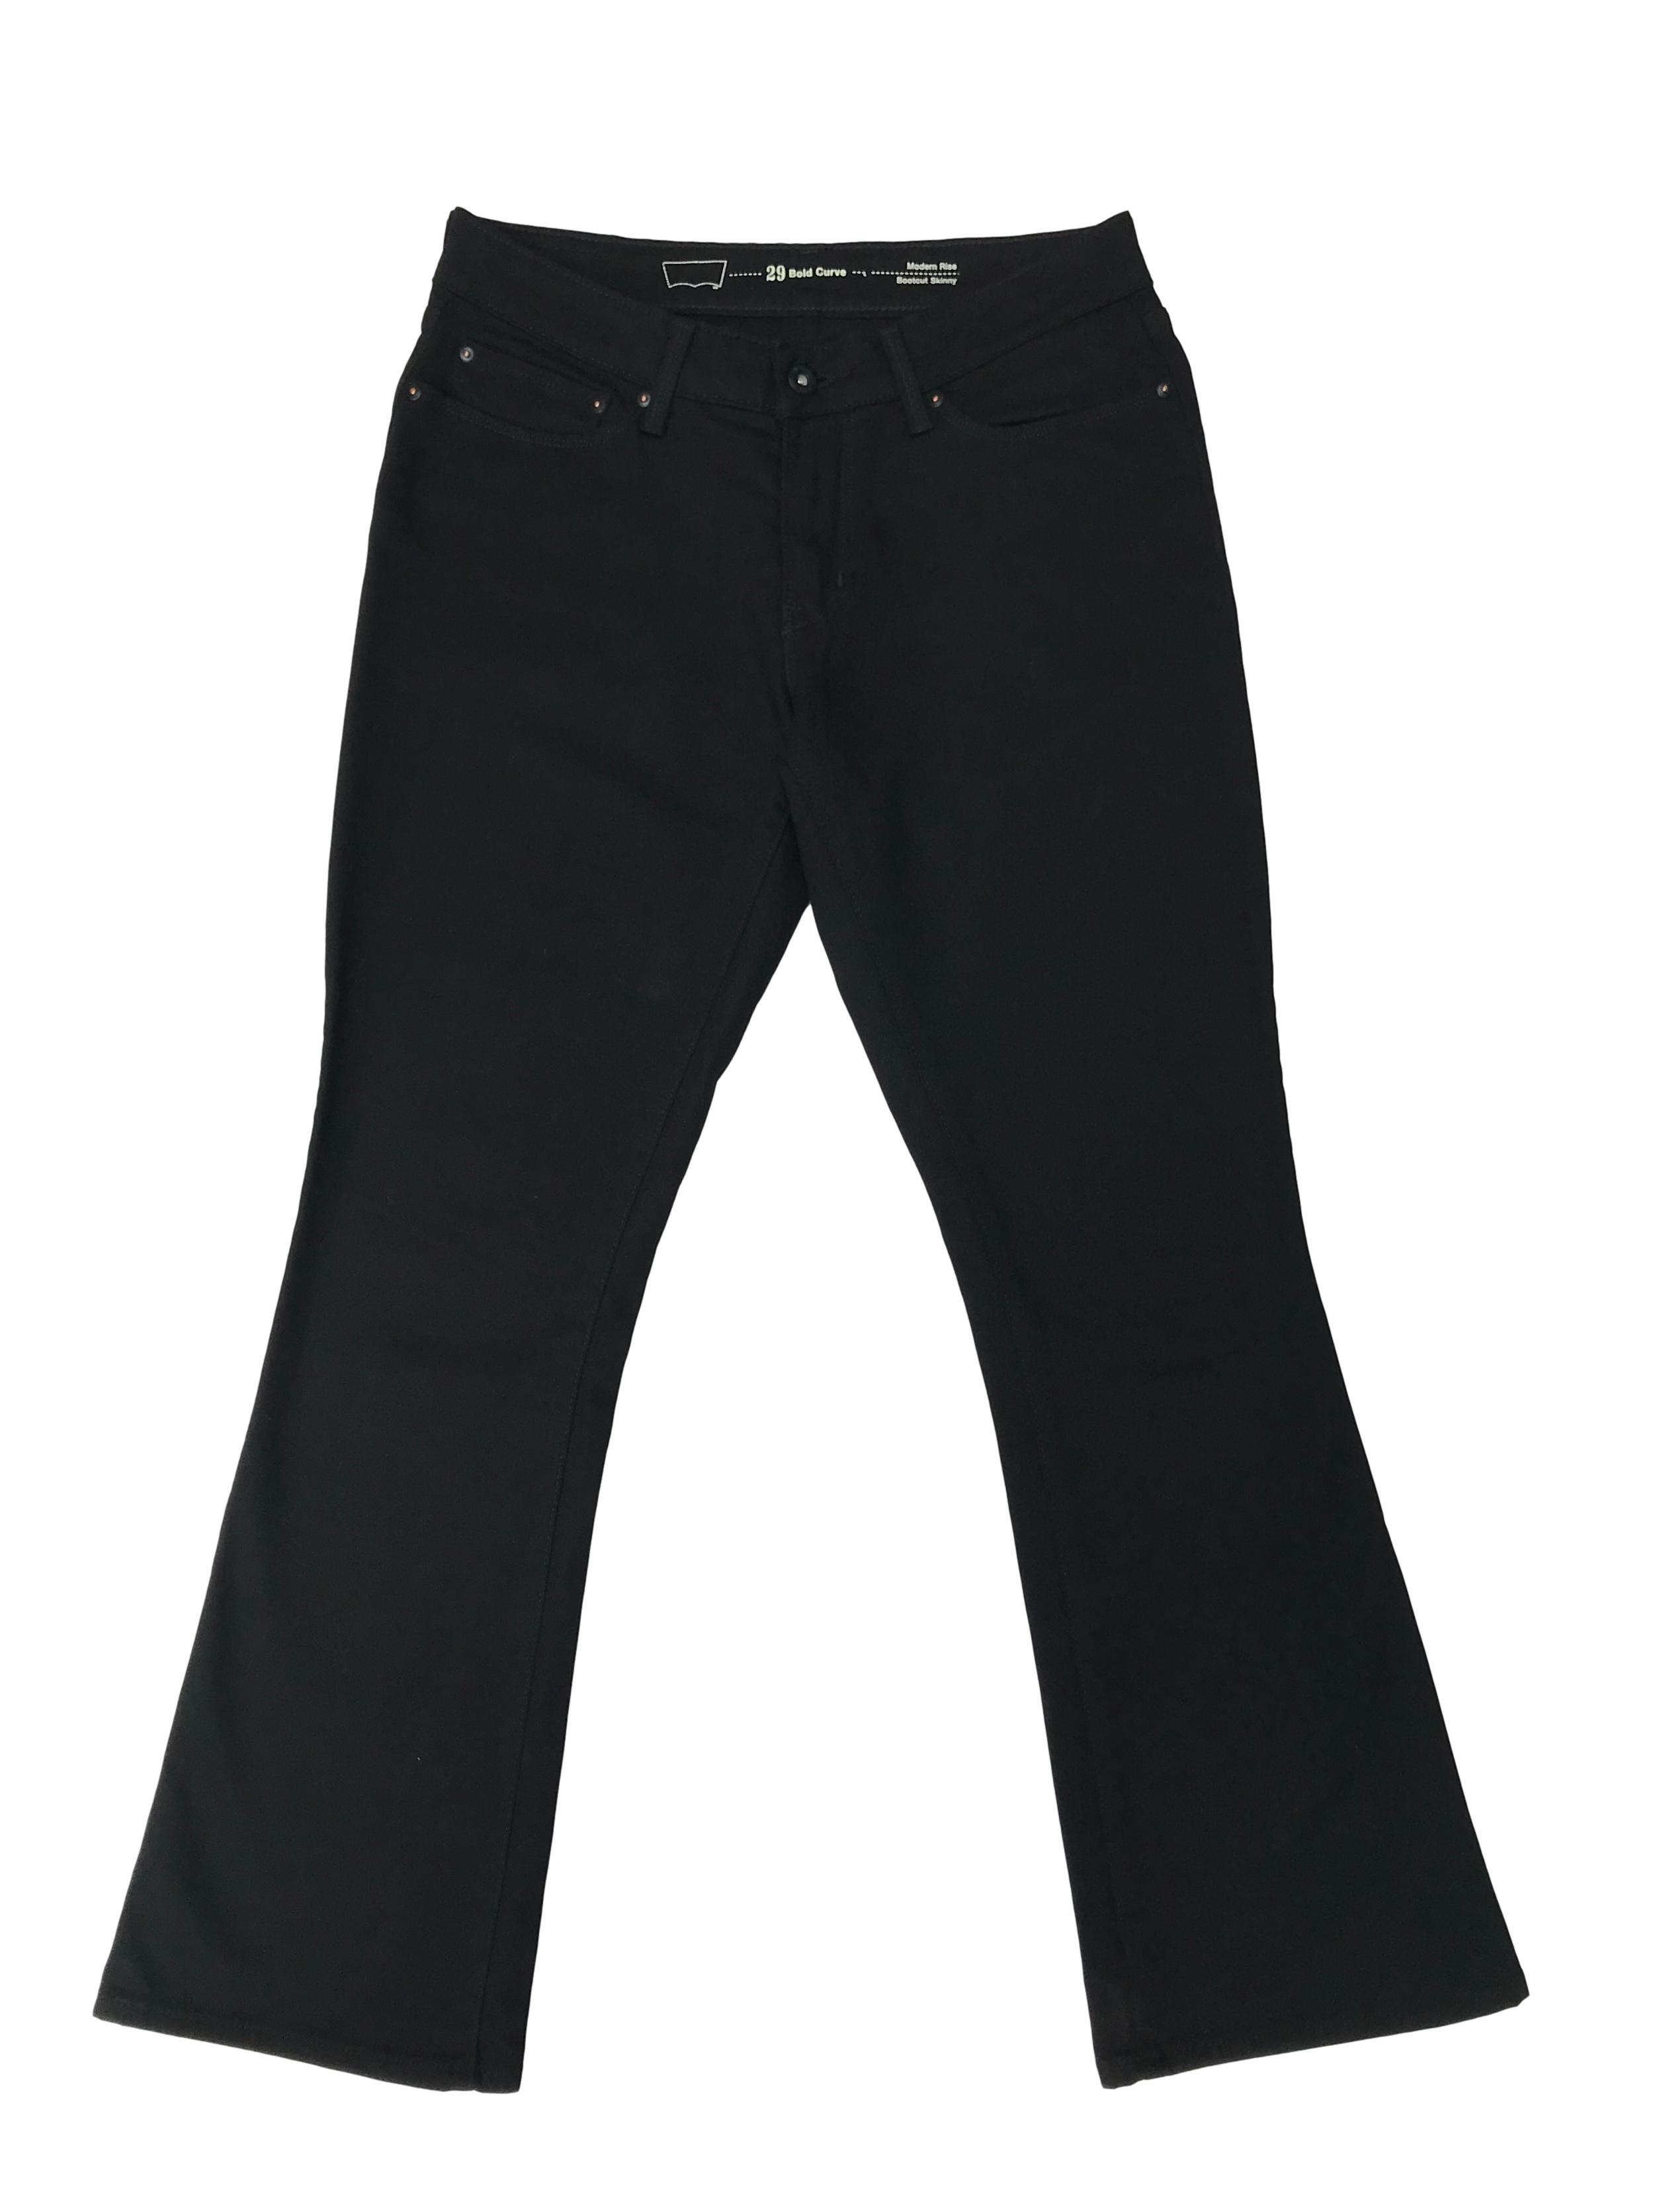 Pantalón jean Levi´s bold curve, mid rise, bootcut skinny. Tiro medio, ligeramente stretch y semicampana. Cintura 75cm Largo 95cm